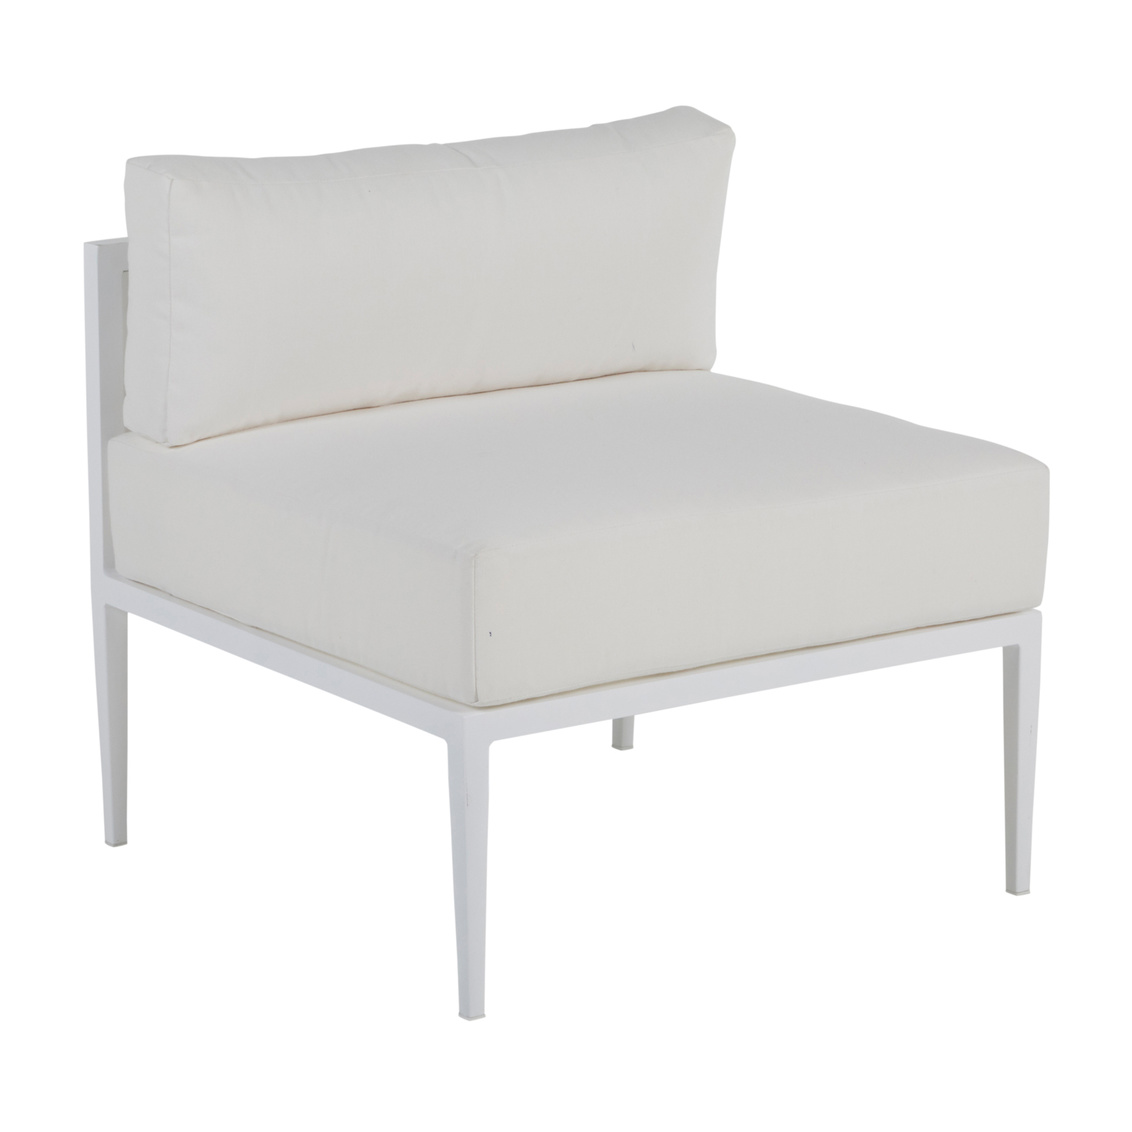 elegante aluminum slipper chair in chalk – frame only product image